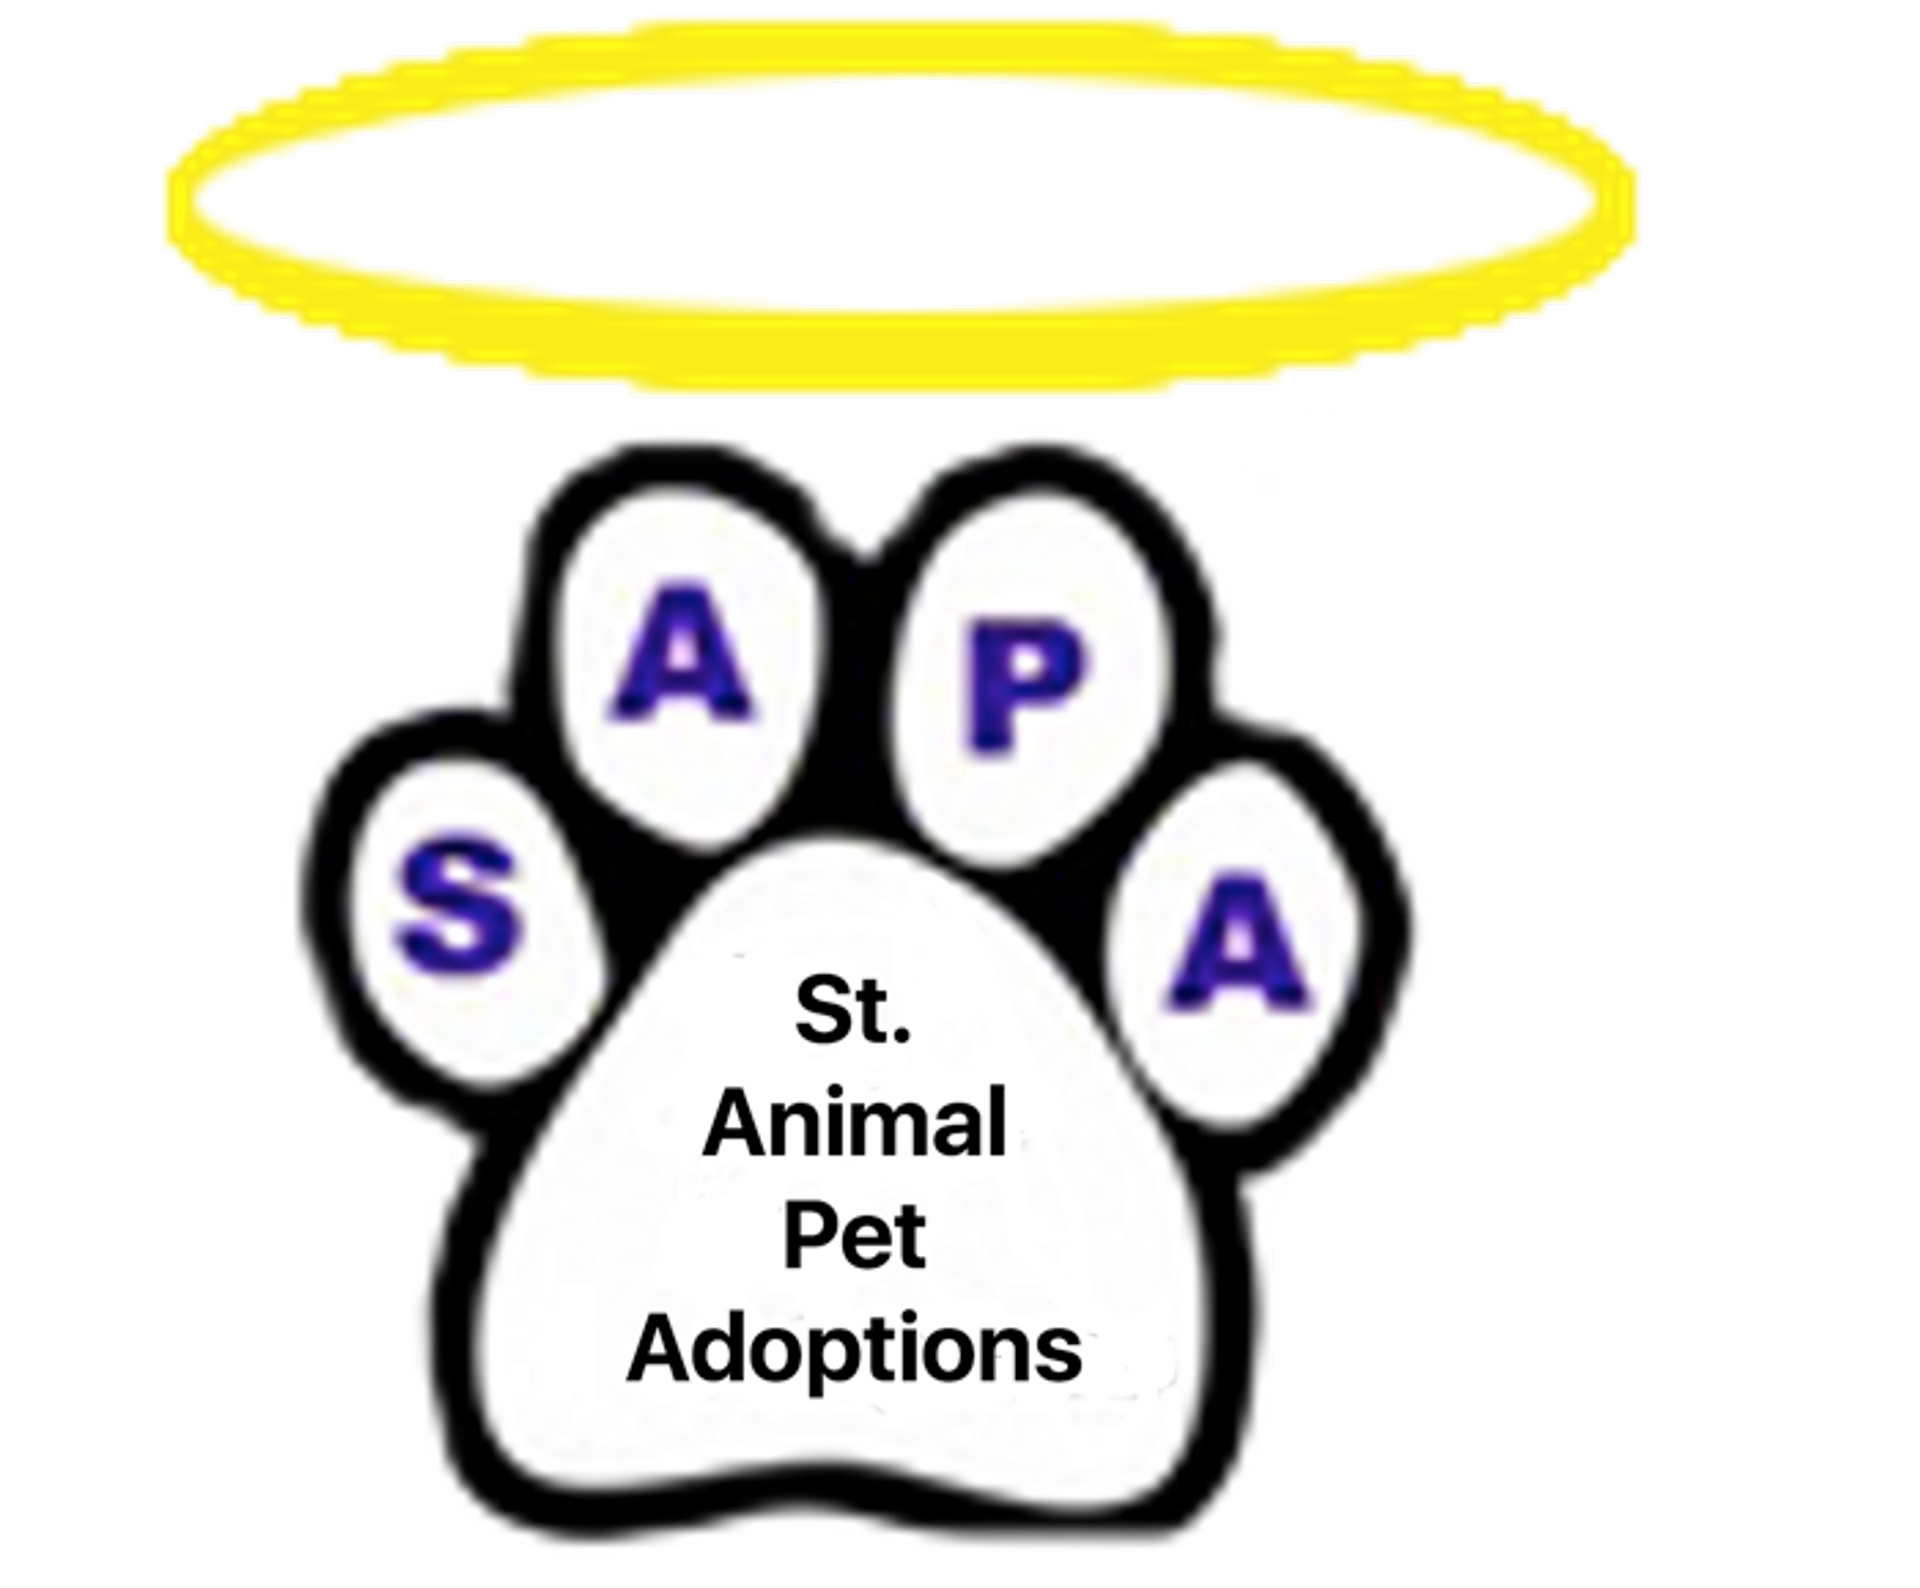 Saint Animal Pet Adoptions (sapa)